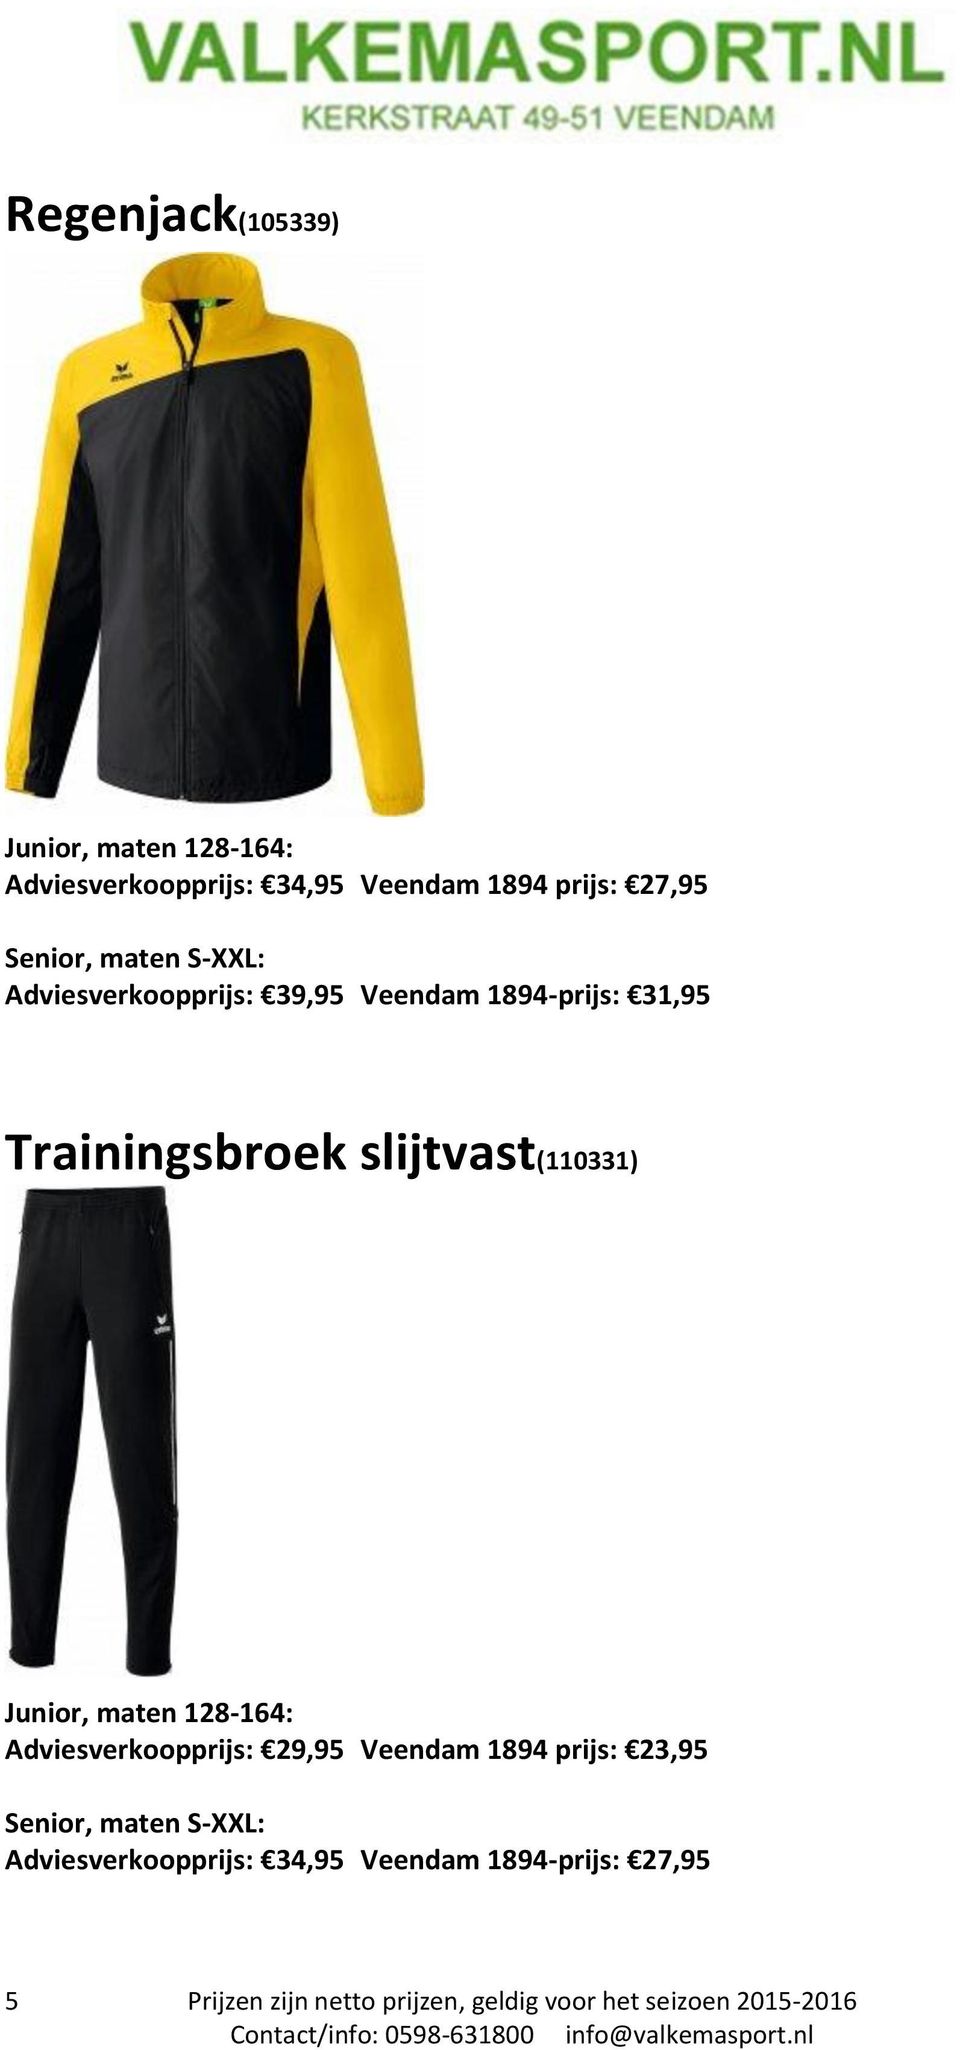 Junior, maten 128-164: Adviesverkoopprijs: 29,95 Veendam 1894 prijs: 23,95 Senior, maten S-XXL: